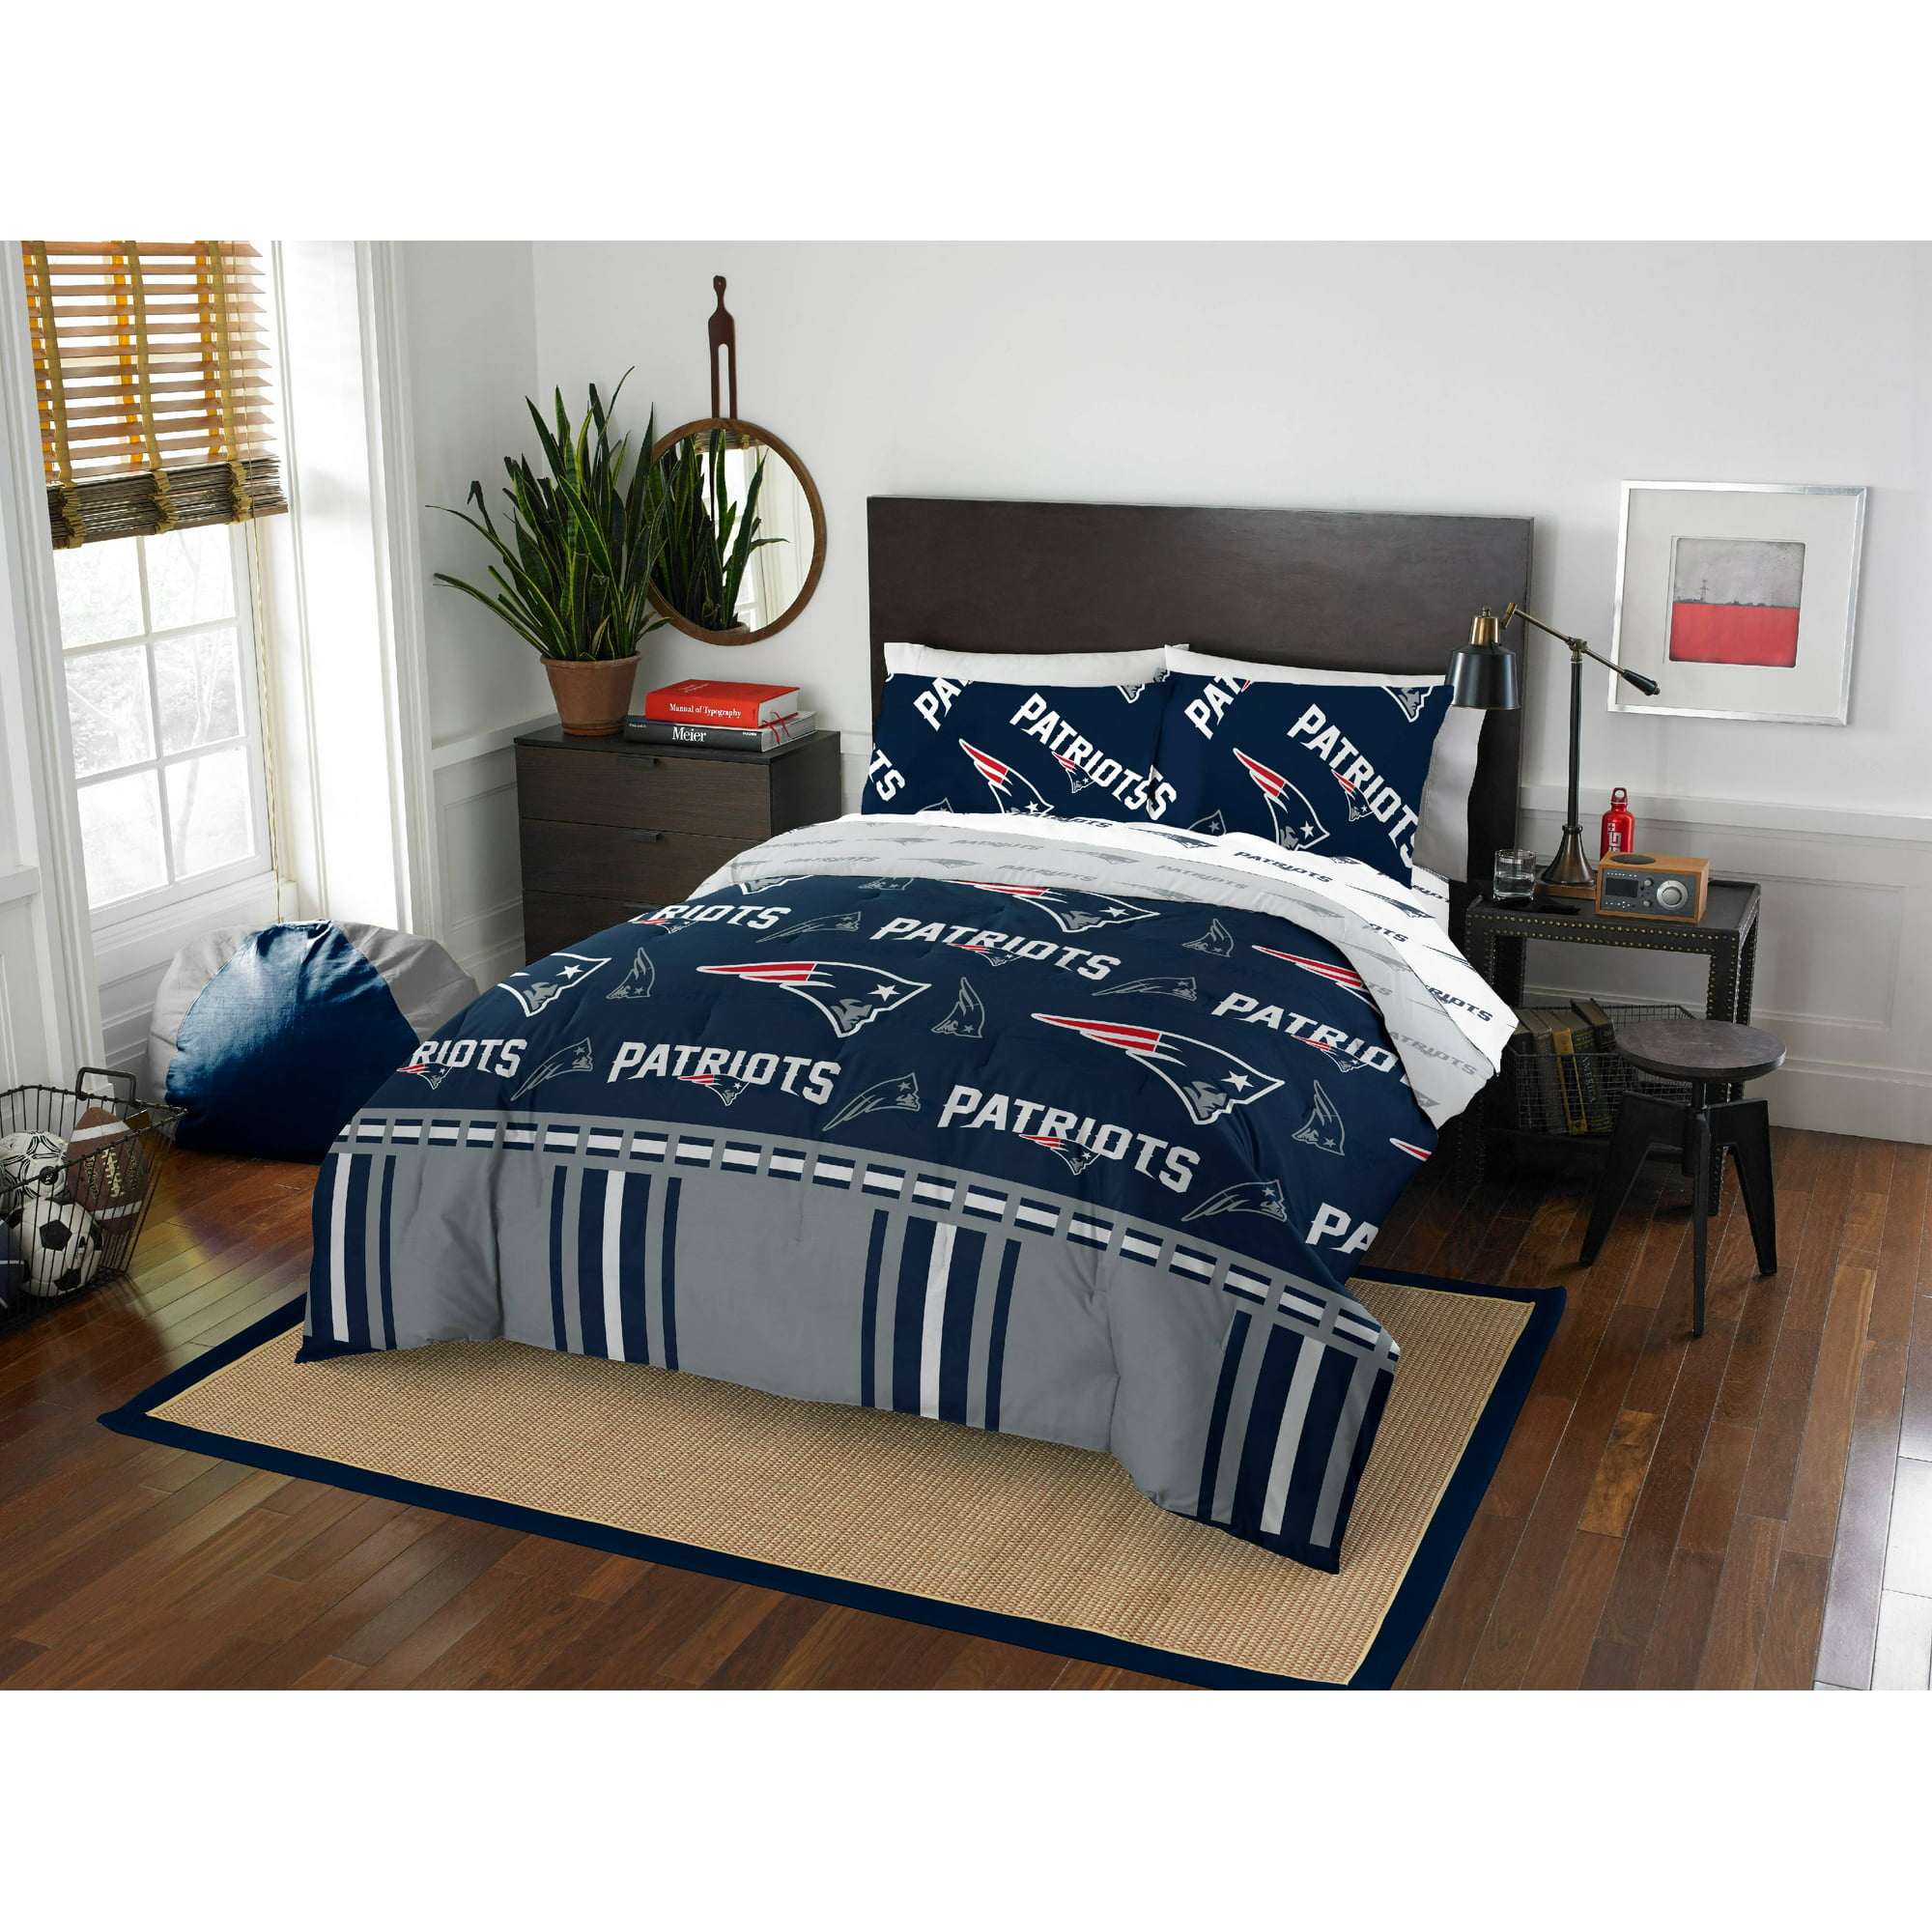 New NFL New England Patriots Bed Set Football Team Comforter Sheet Set, Twin 190604066158 eBay